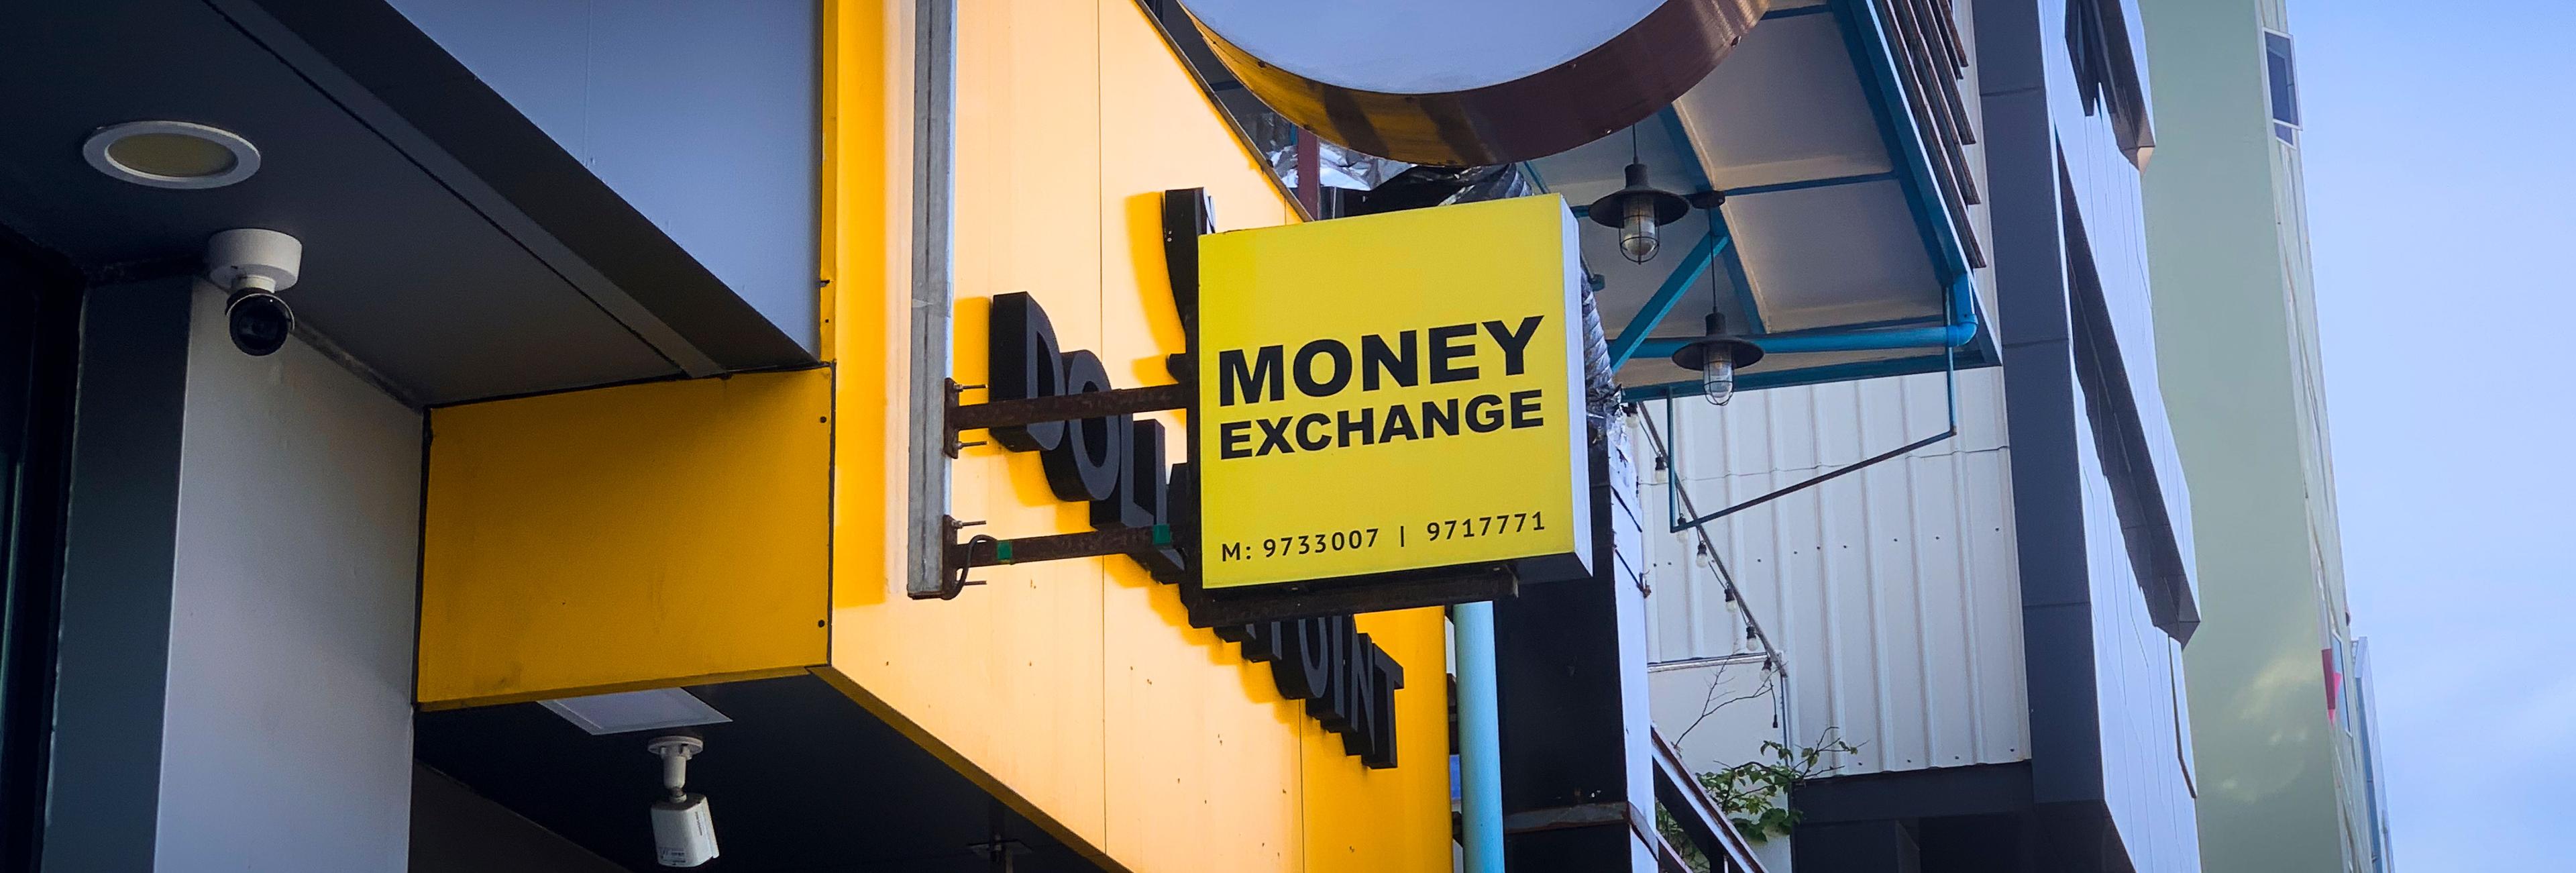 Money Exchange in the Maldives